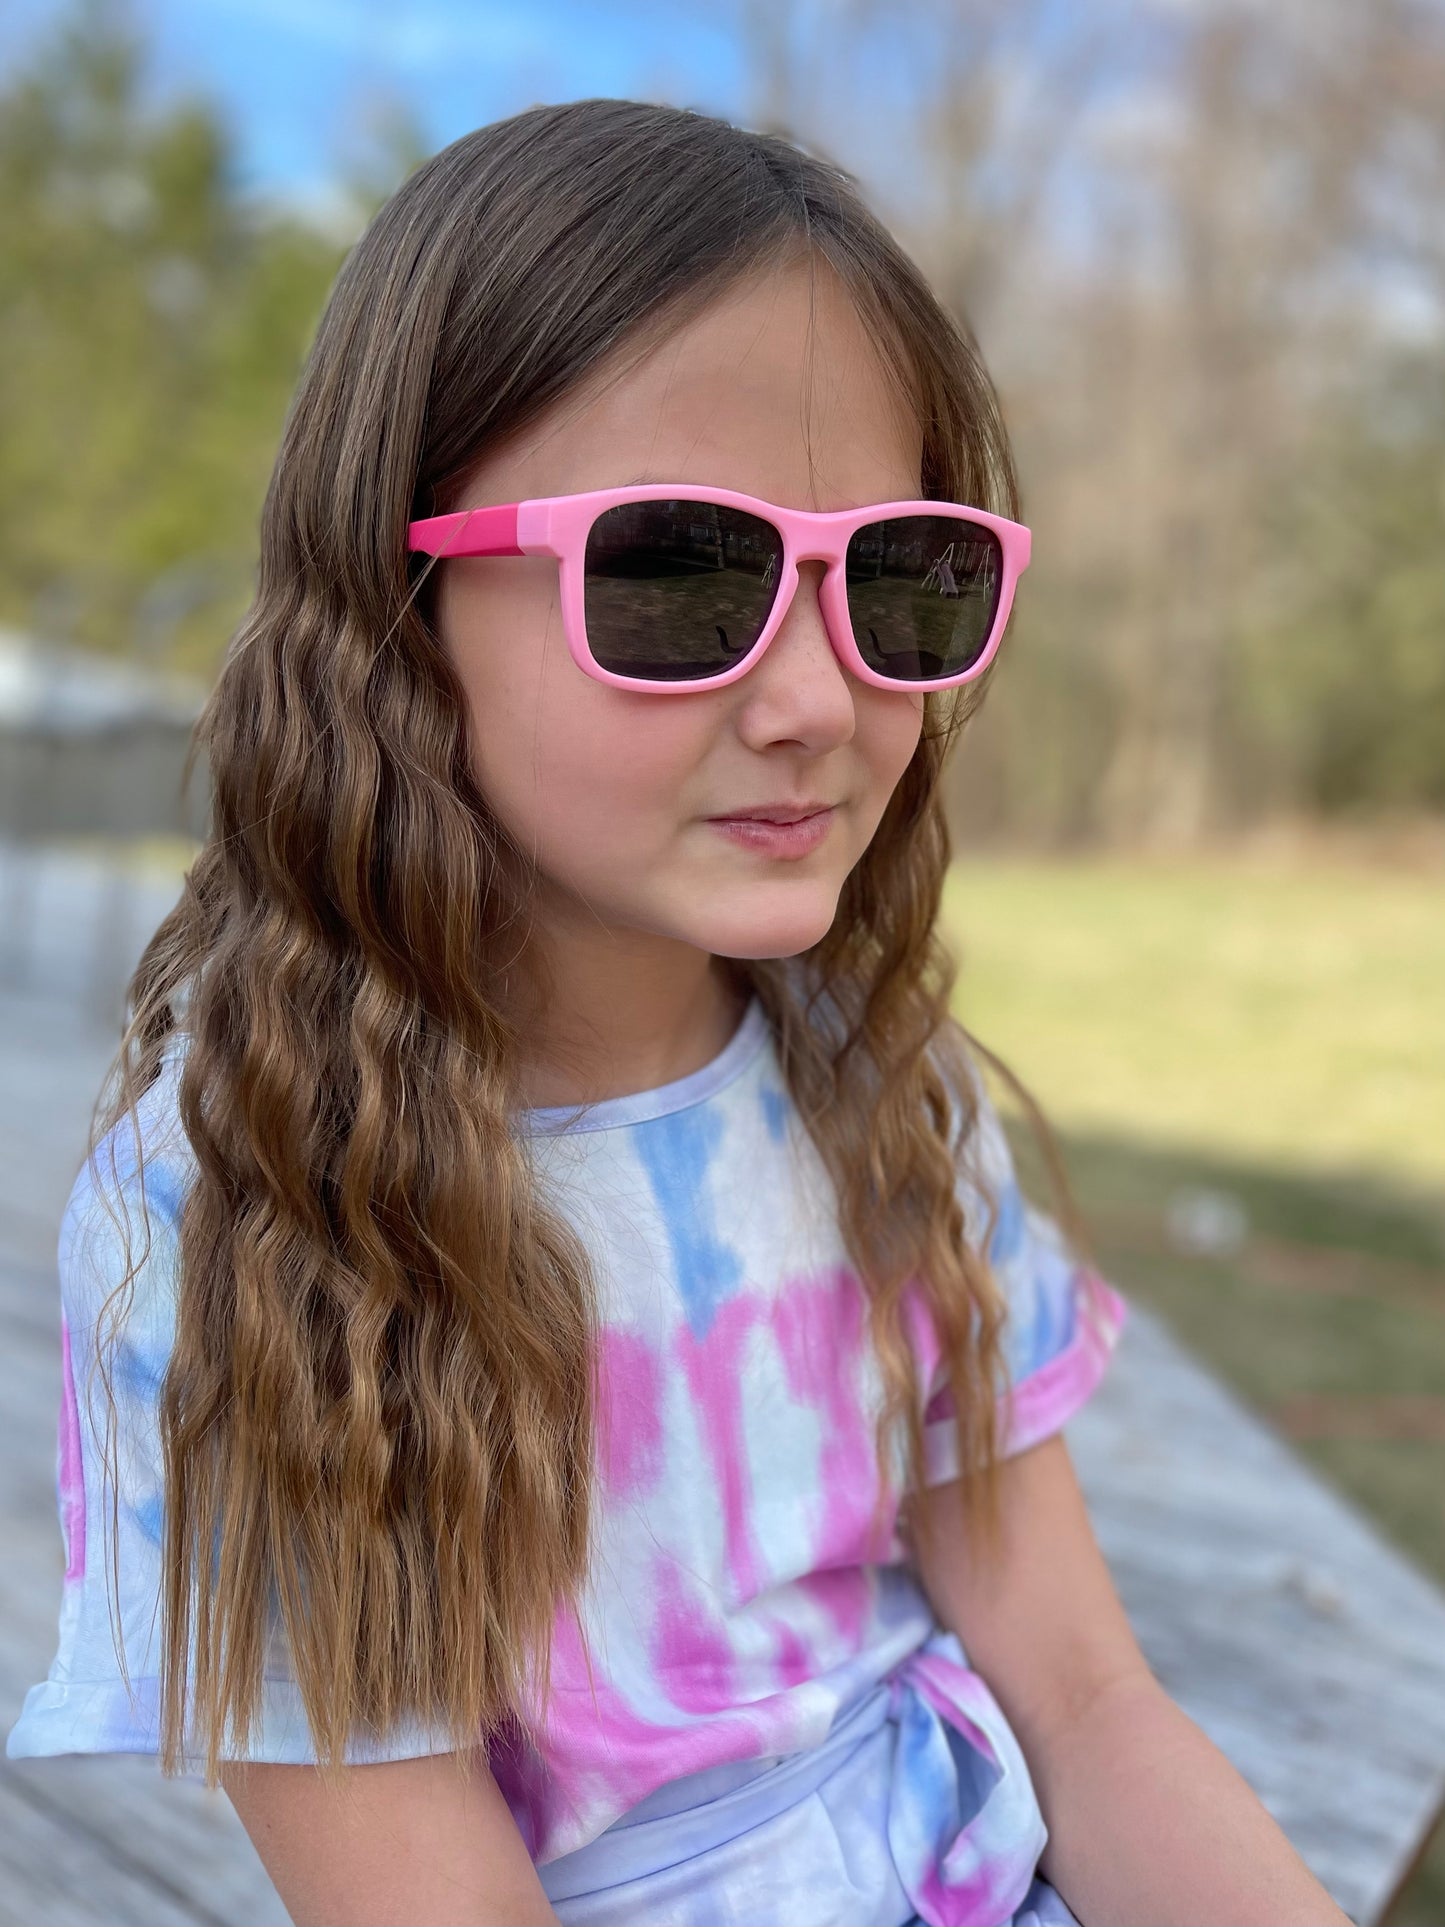 Children Classic Rectangle Polarized Sunglasses